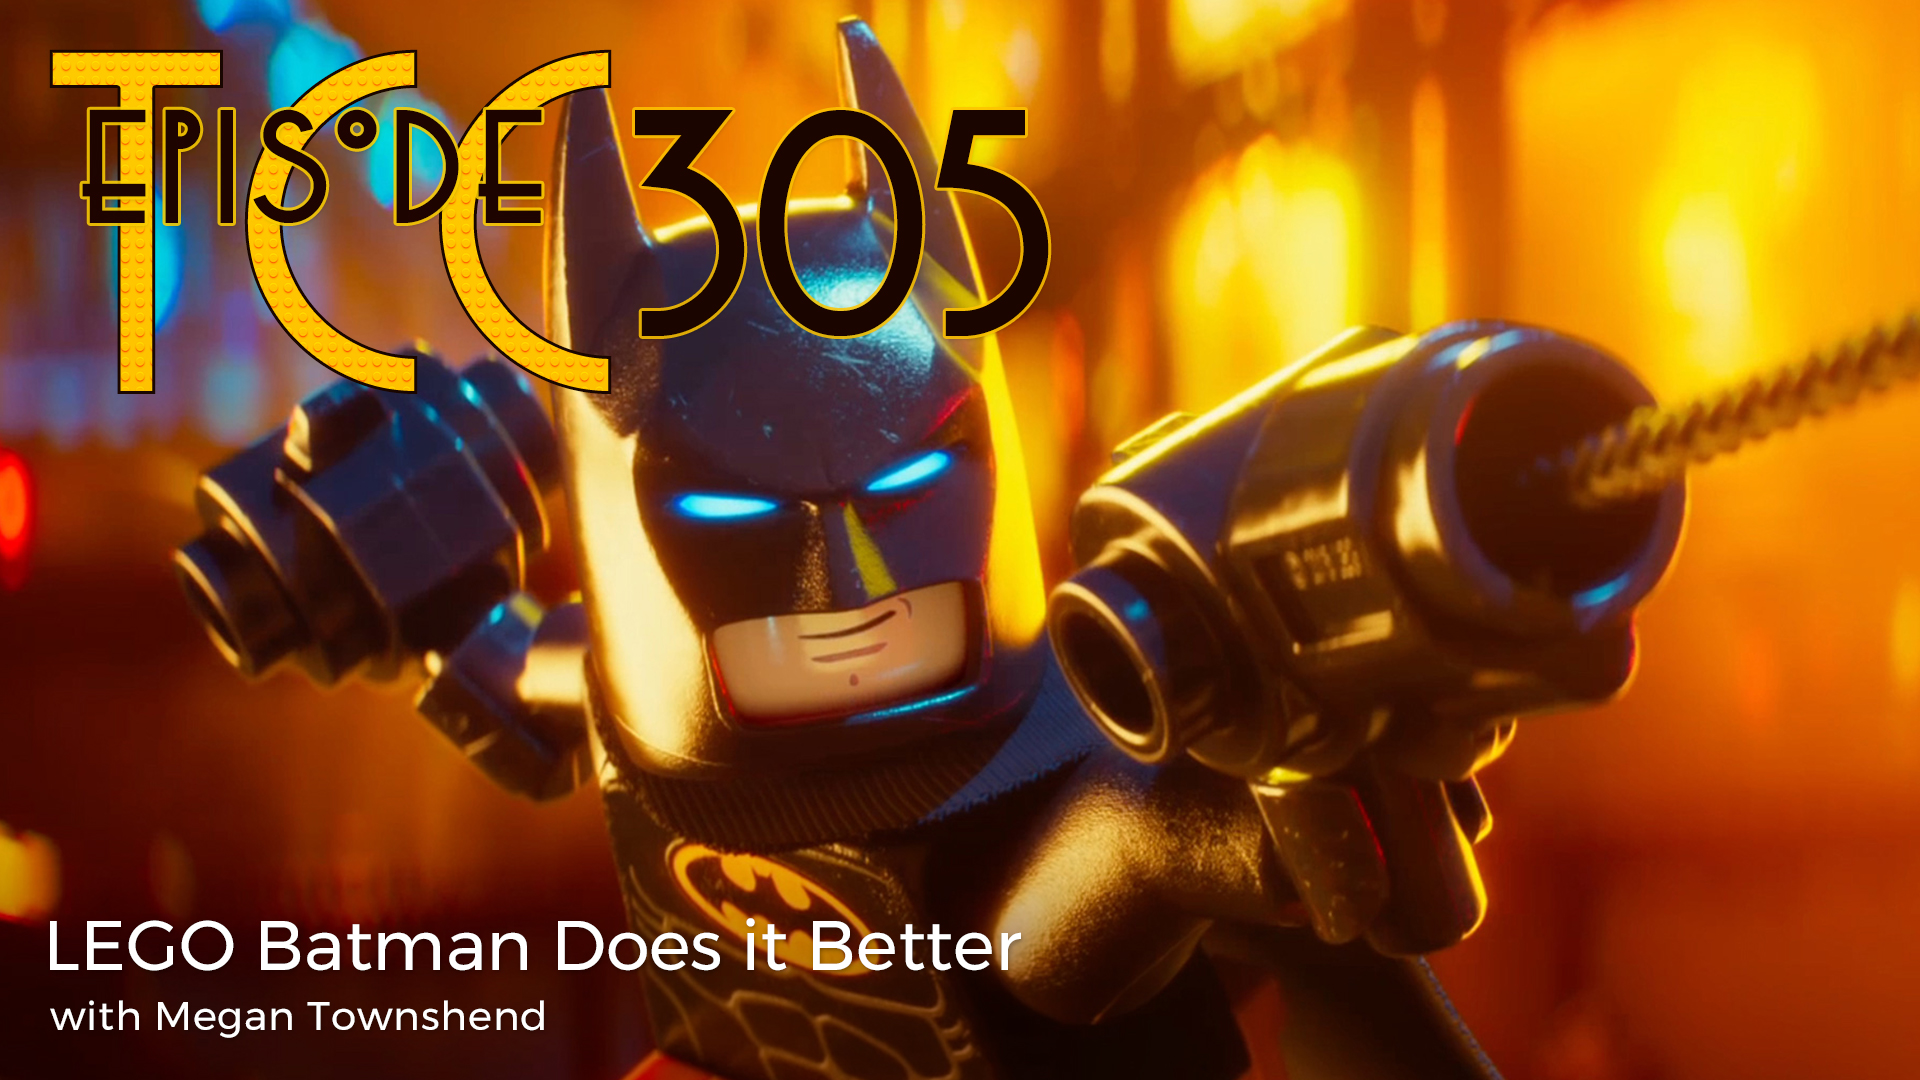 The Citadel Cafe 305: LEGO Batman Does It Better